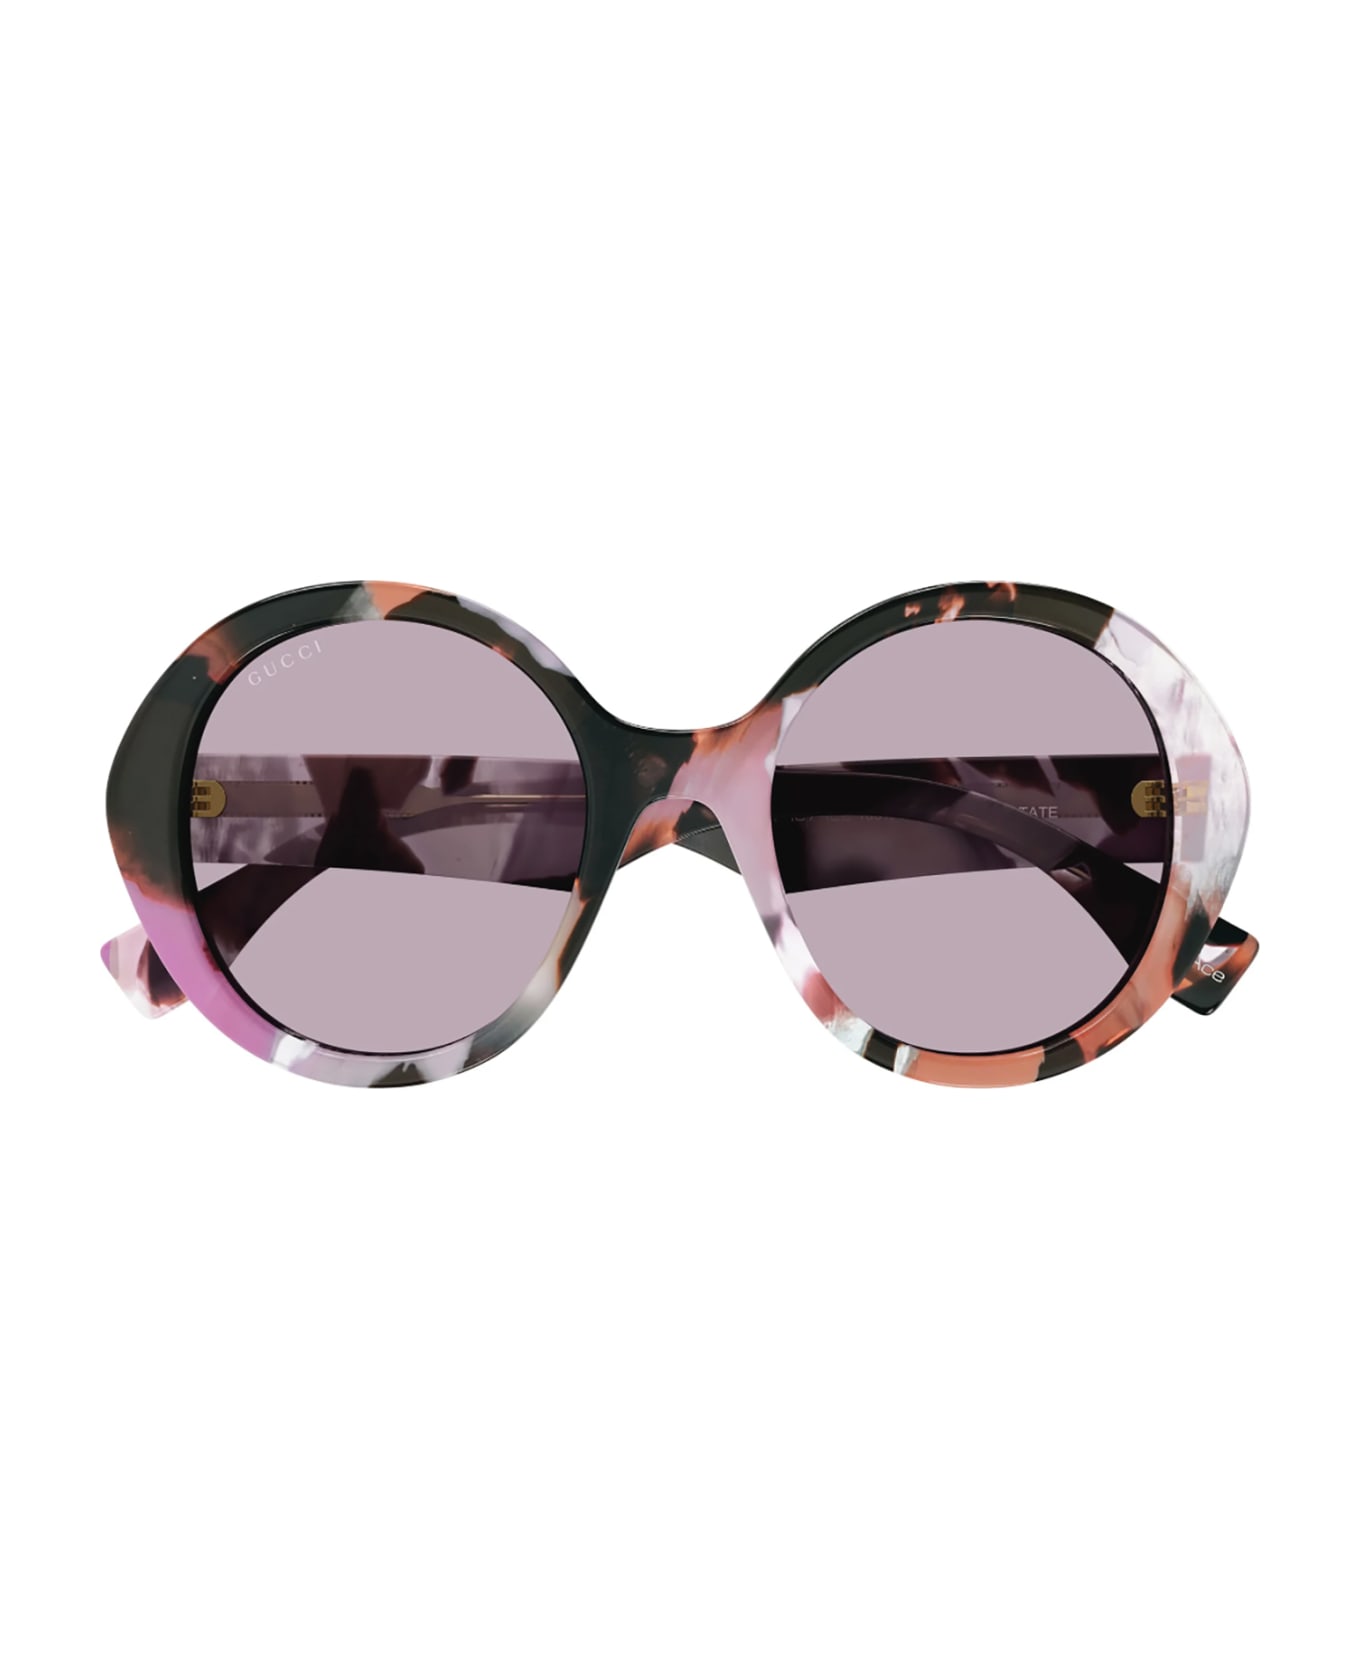 Gucci Eyewear GG1628S Sunglasses - Pink Pink Violet